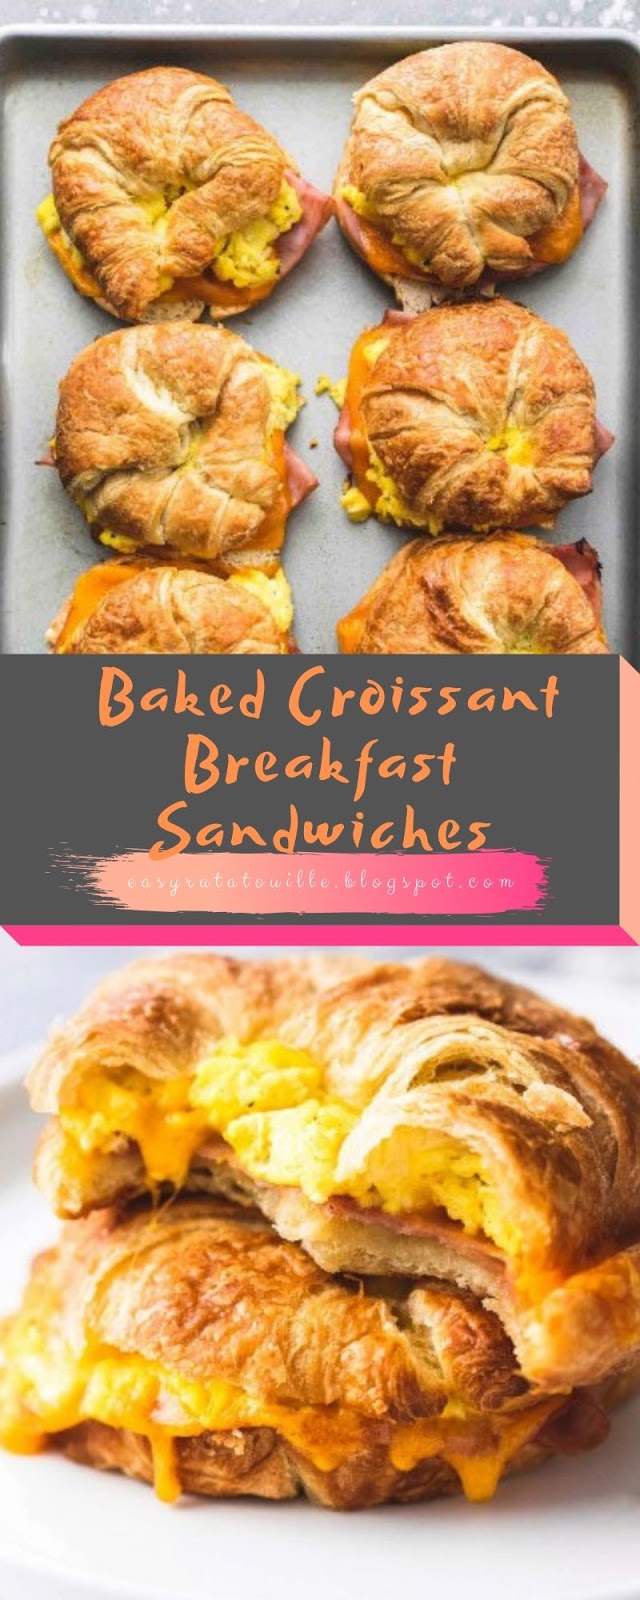 Baked Croissant Breakfast Sandwiches